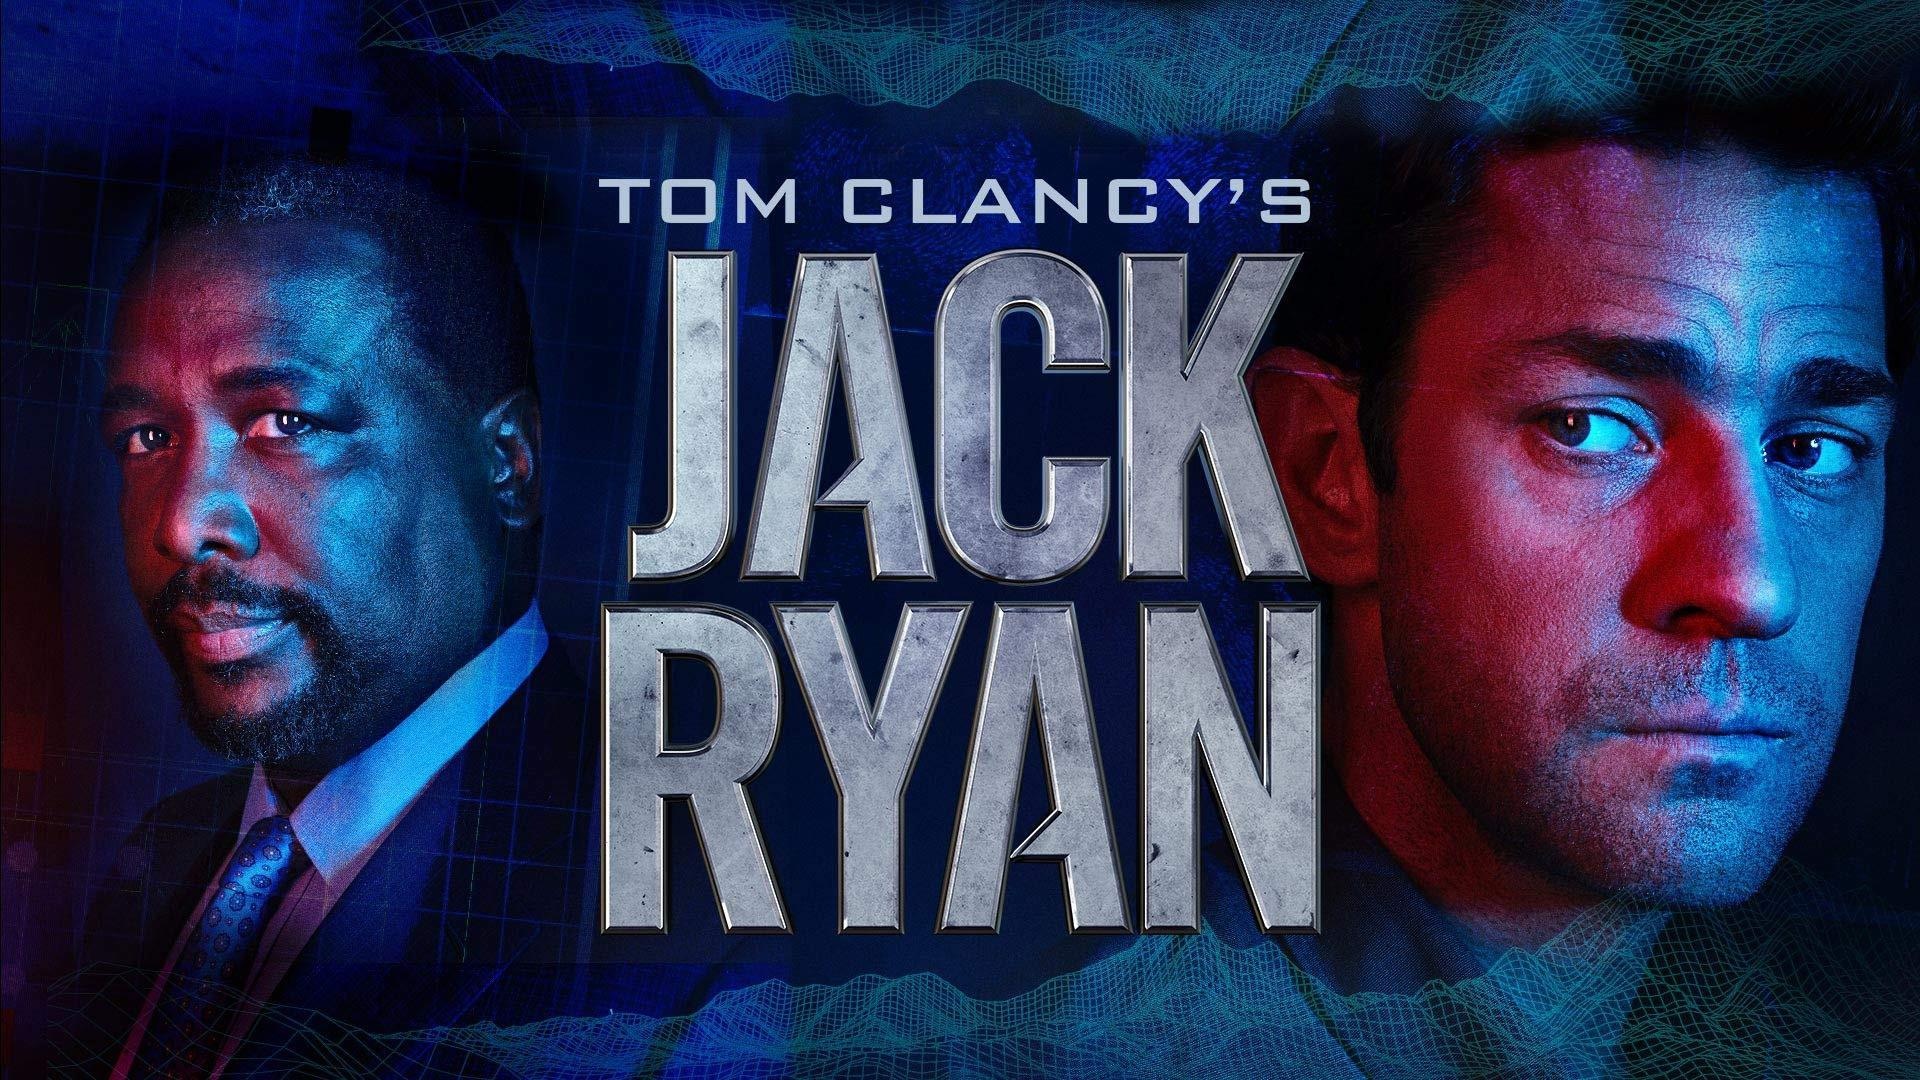 Jack Ryan TV series, Tom Clancy's, HD wallpapers, CIA agent, 1920x1080 Full HD Desktop